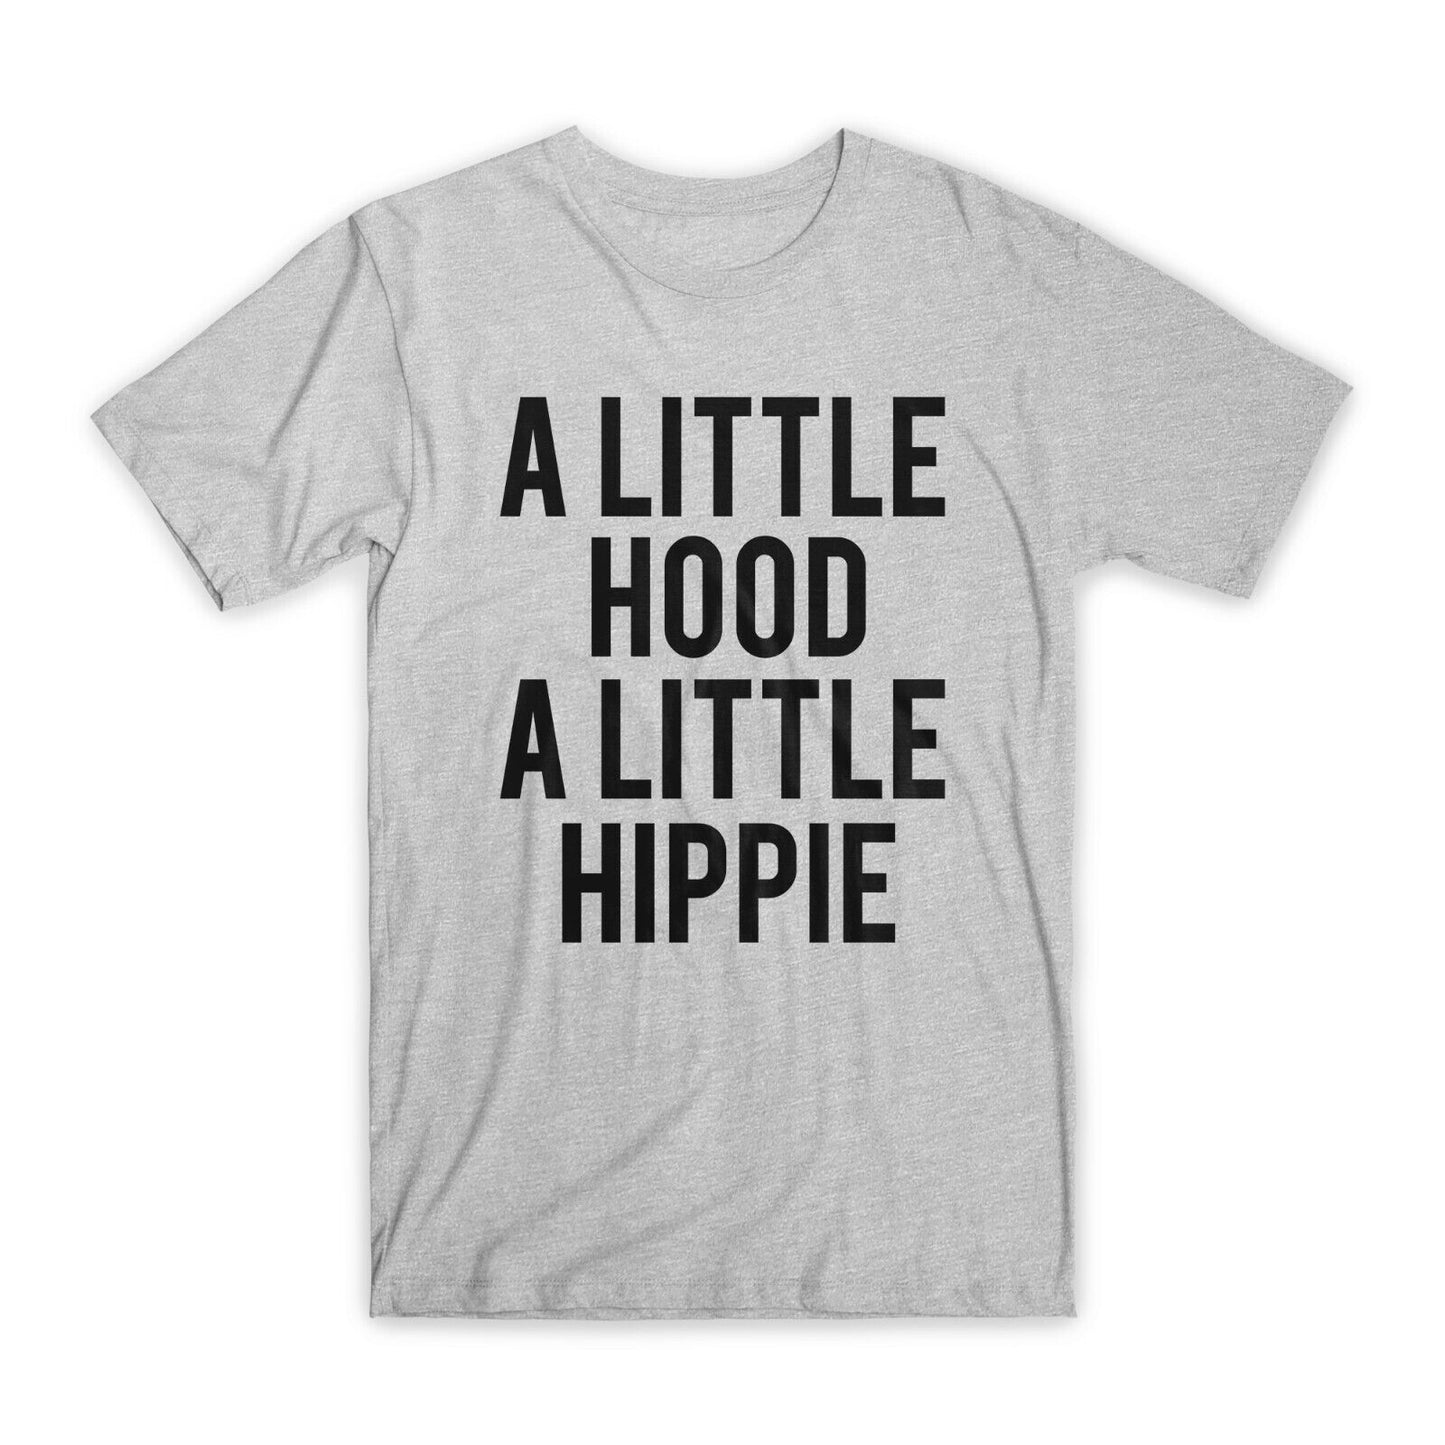 A Little Hood A Little Hippie T-Shirt Premium Soft Cotton Funny Tees Gifts NEW